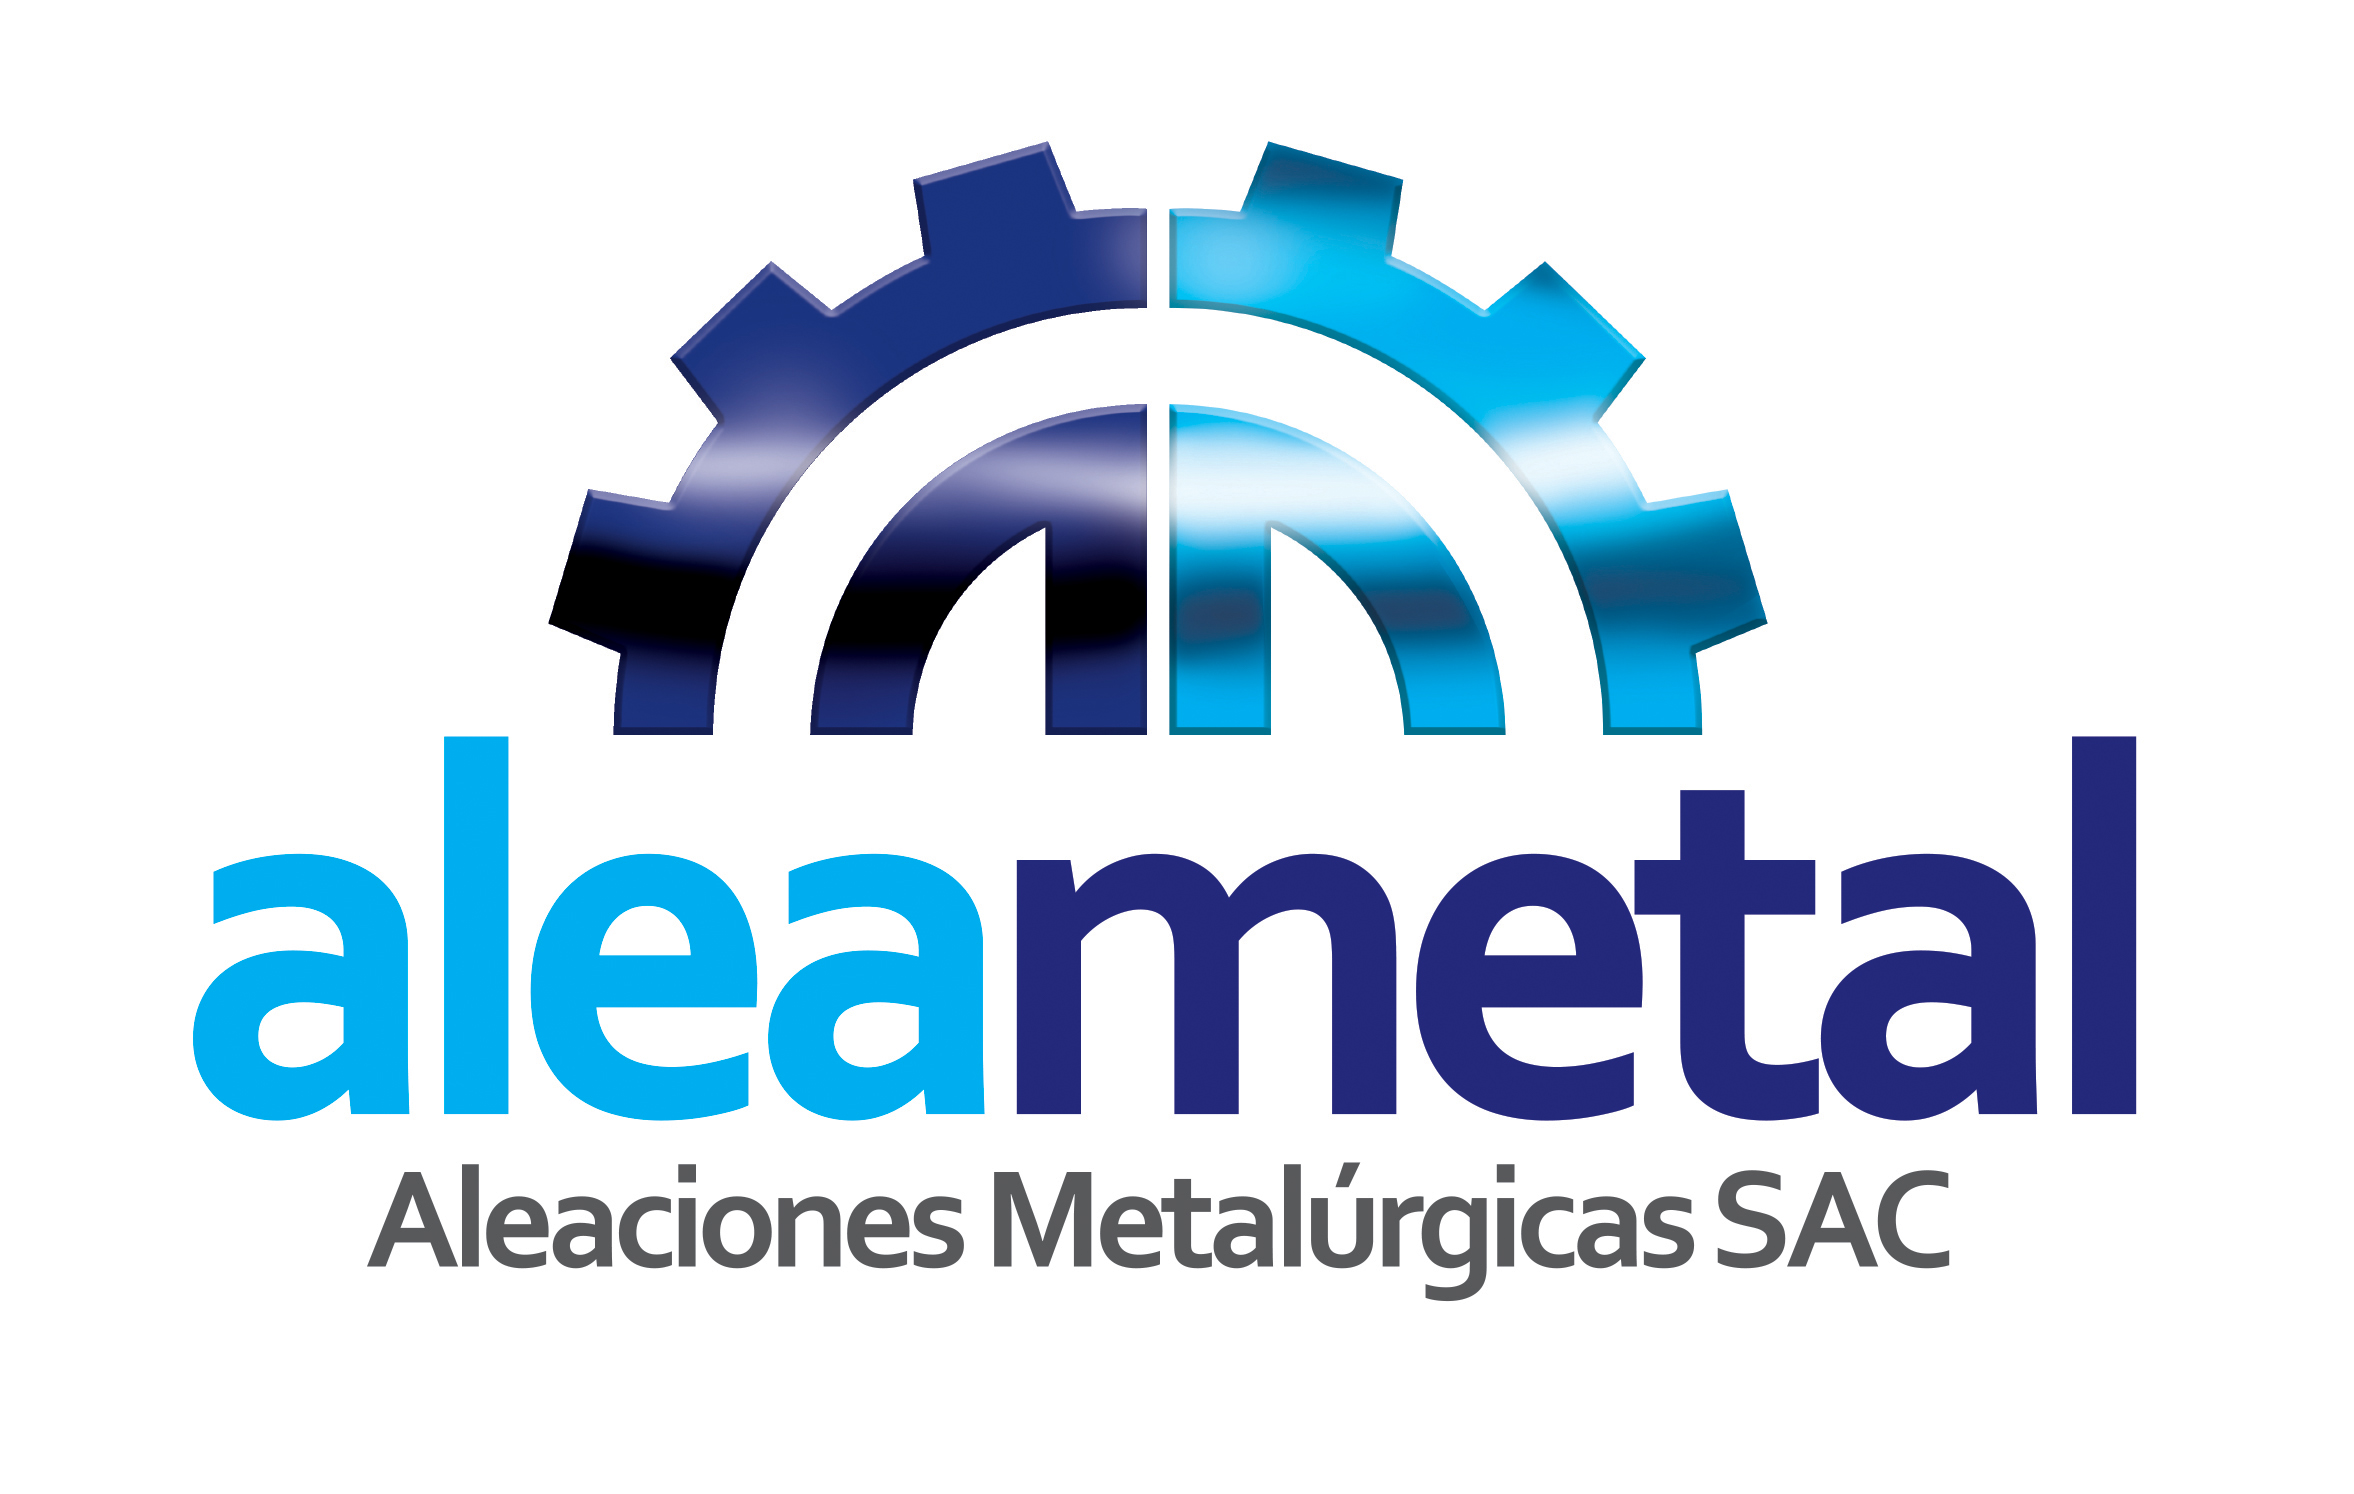 ALEACIONES METALURGICAS S.A.C